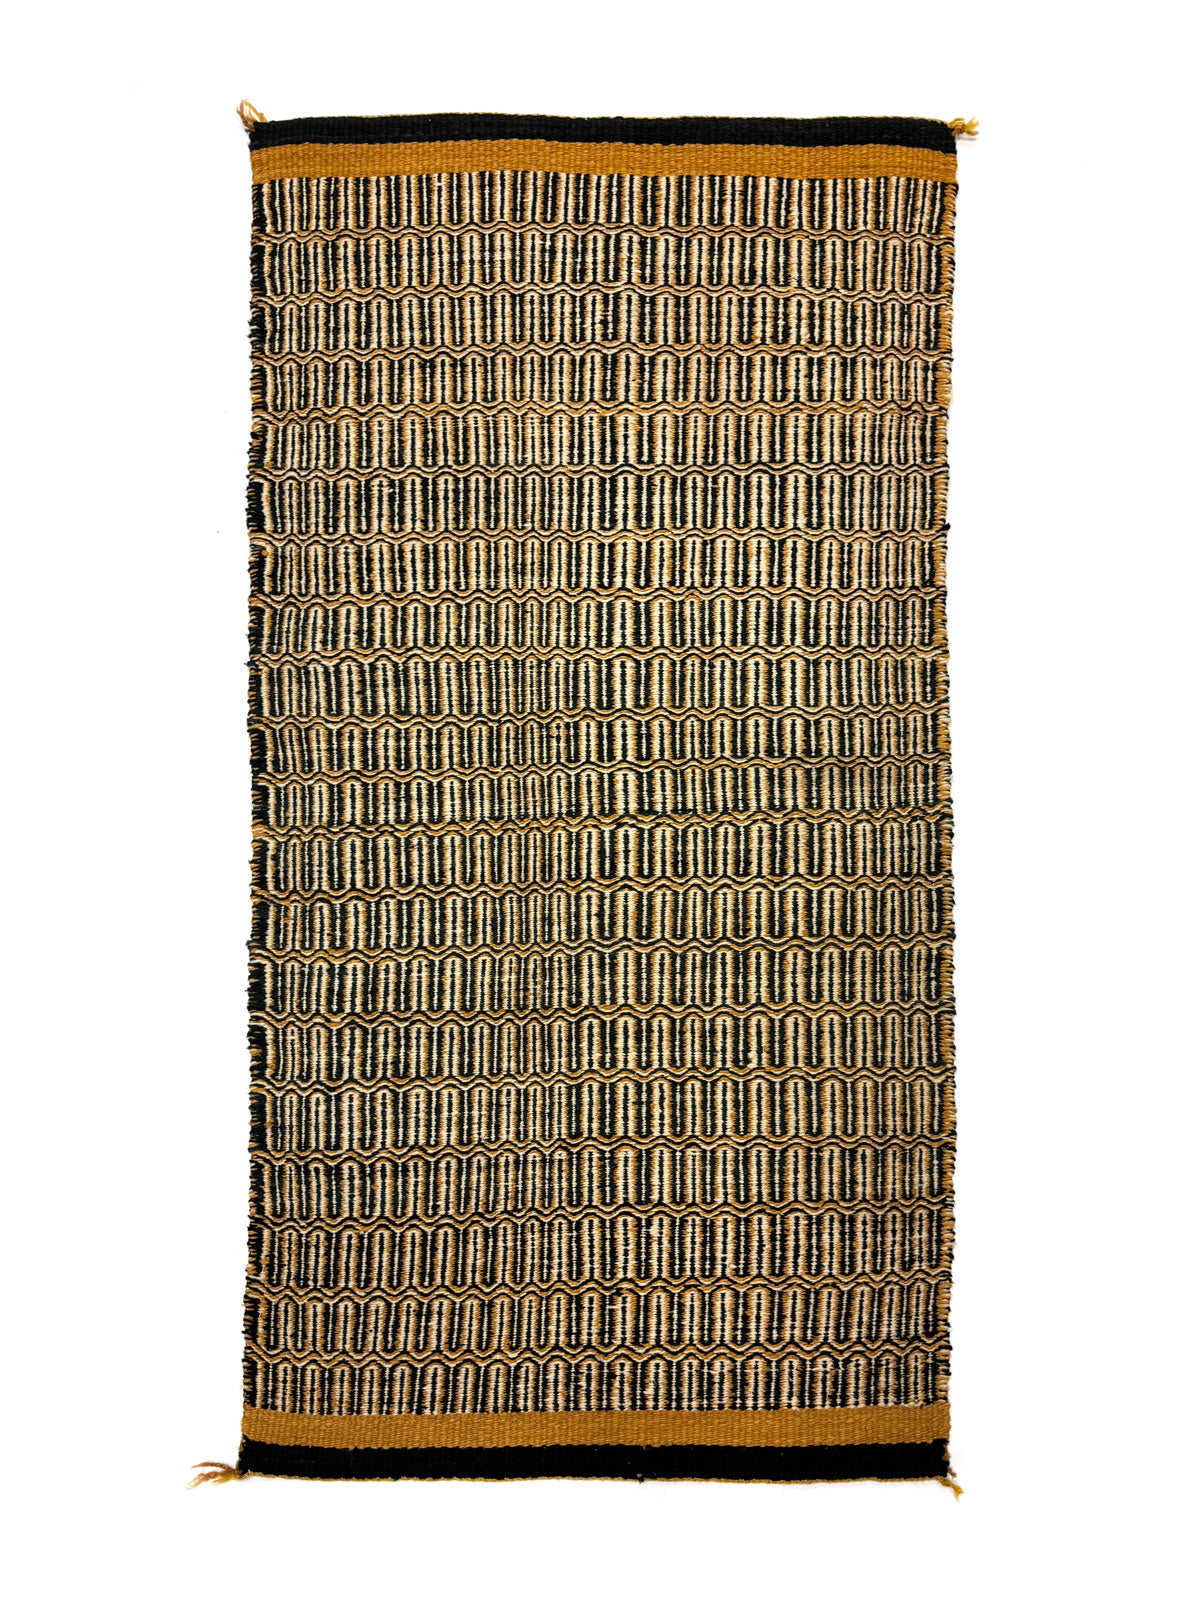 Navajo Twill Weave Rug c. 1930-40s, 61.5" x 30.5" (T6602)